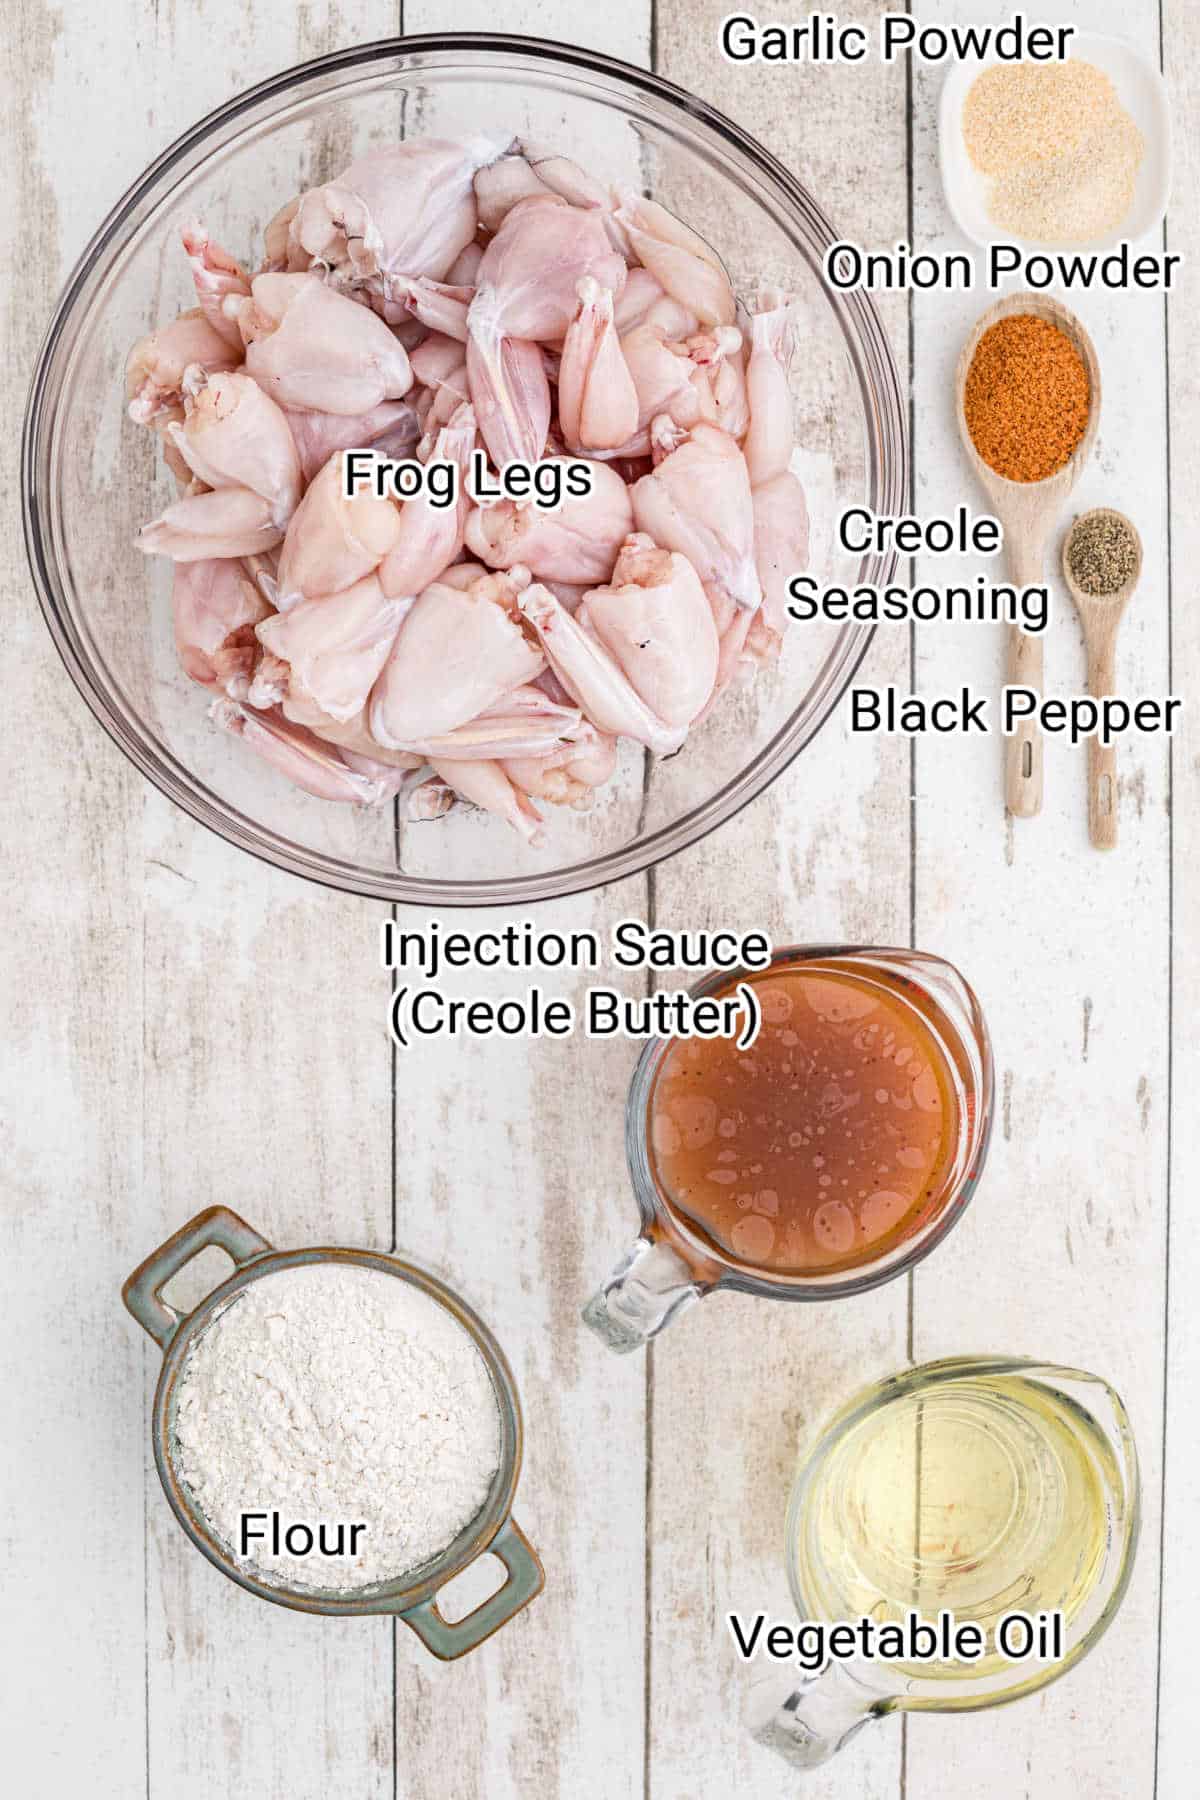 ingredients needed to make fried frog legs recipe